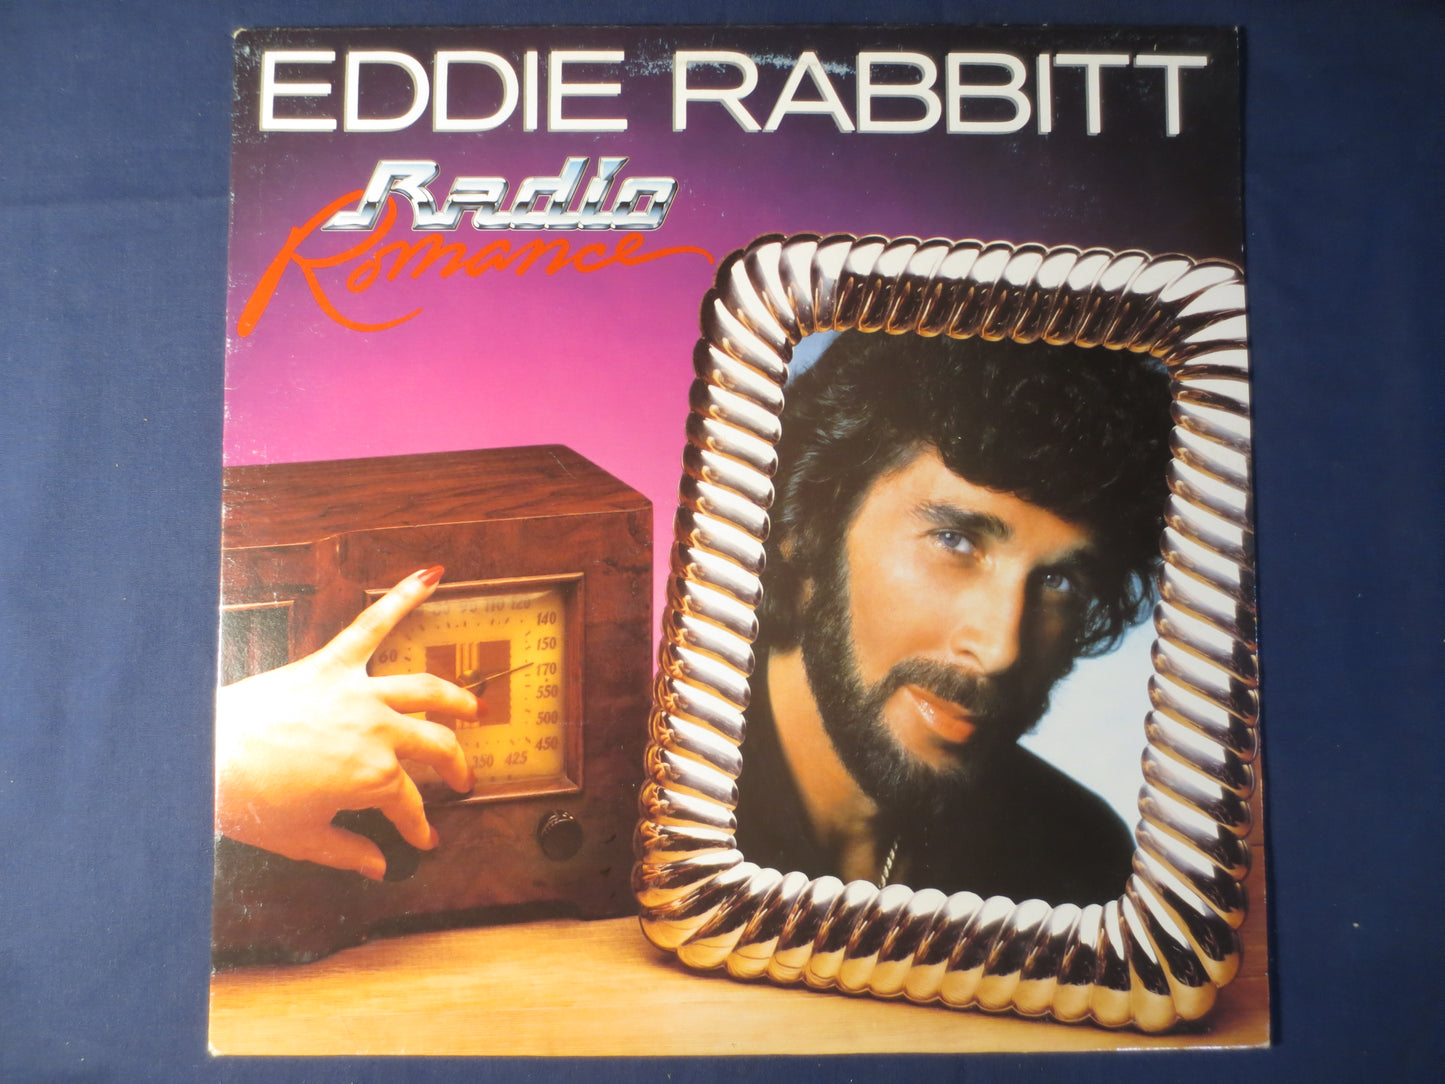 EDDIE RABBITT, Radio ROMANCE, Eddie Rabbitt Album, Eddie Rabbitt Vinyl, Country Records, Vintage Vinyl, 1982 Records